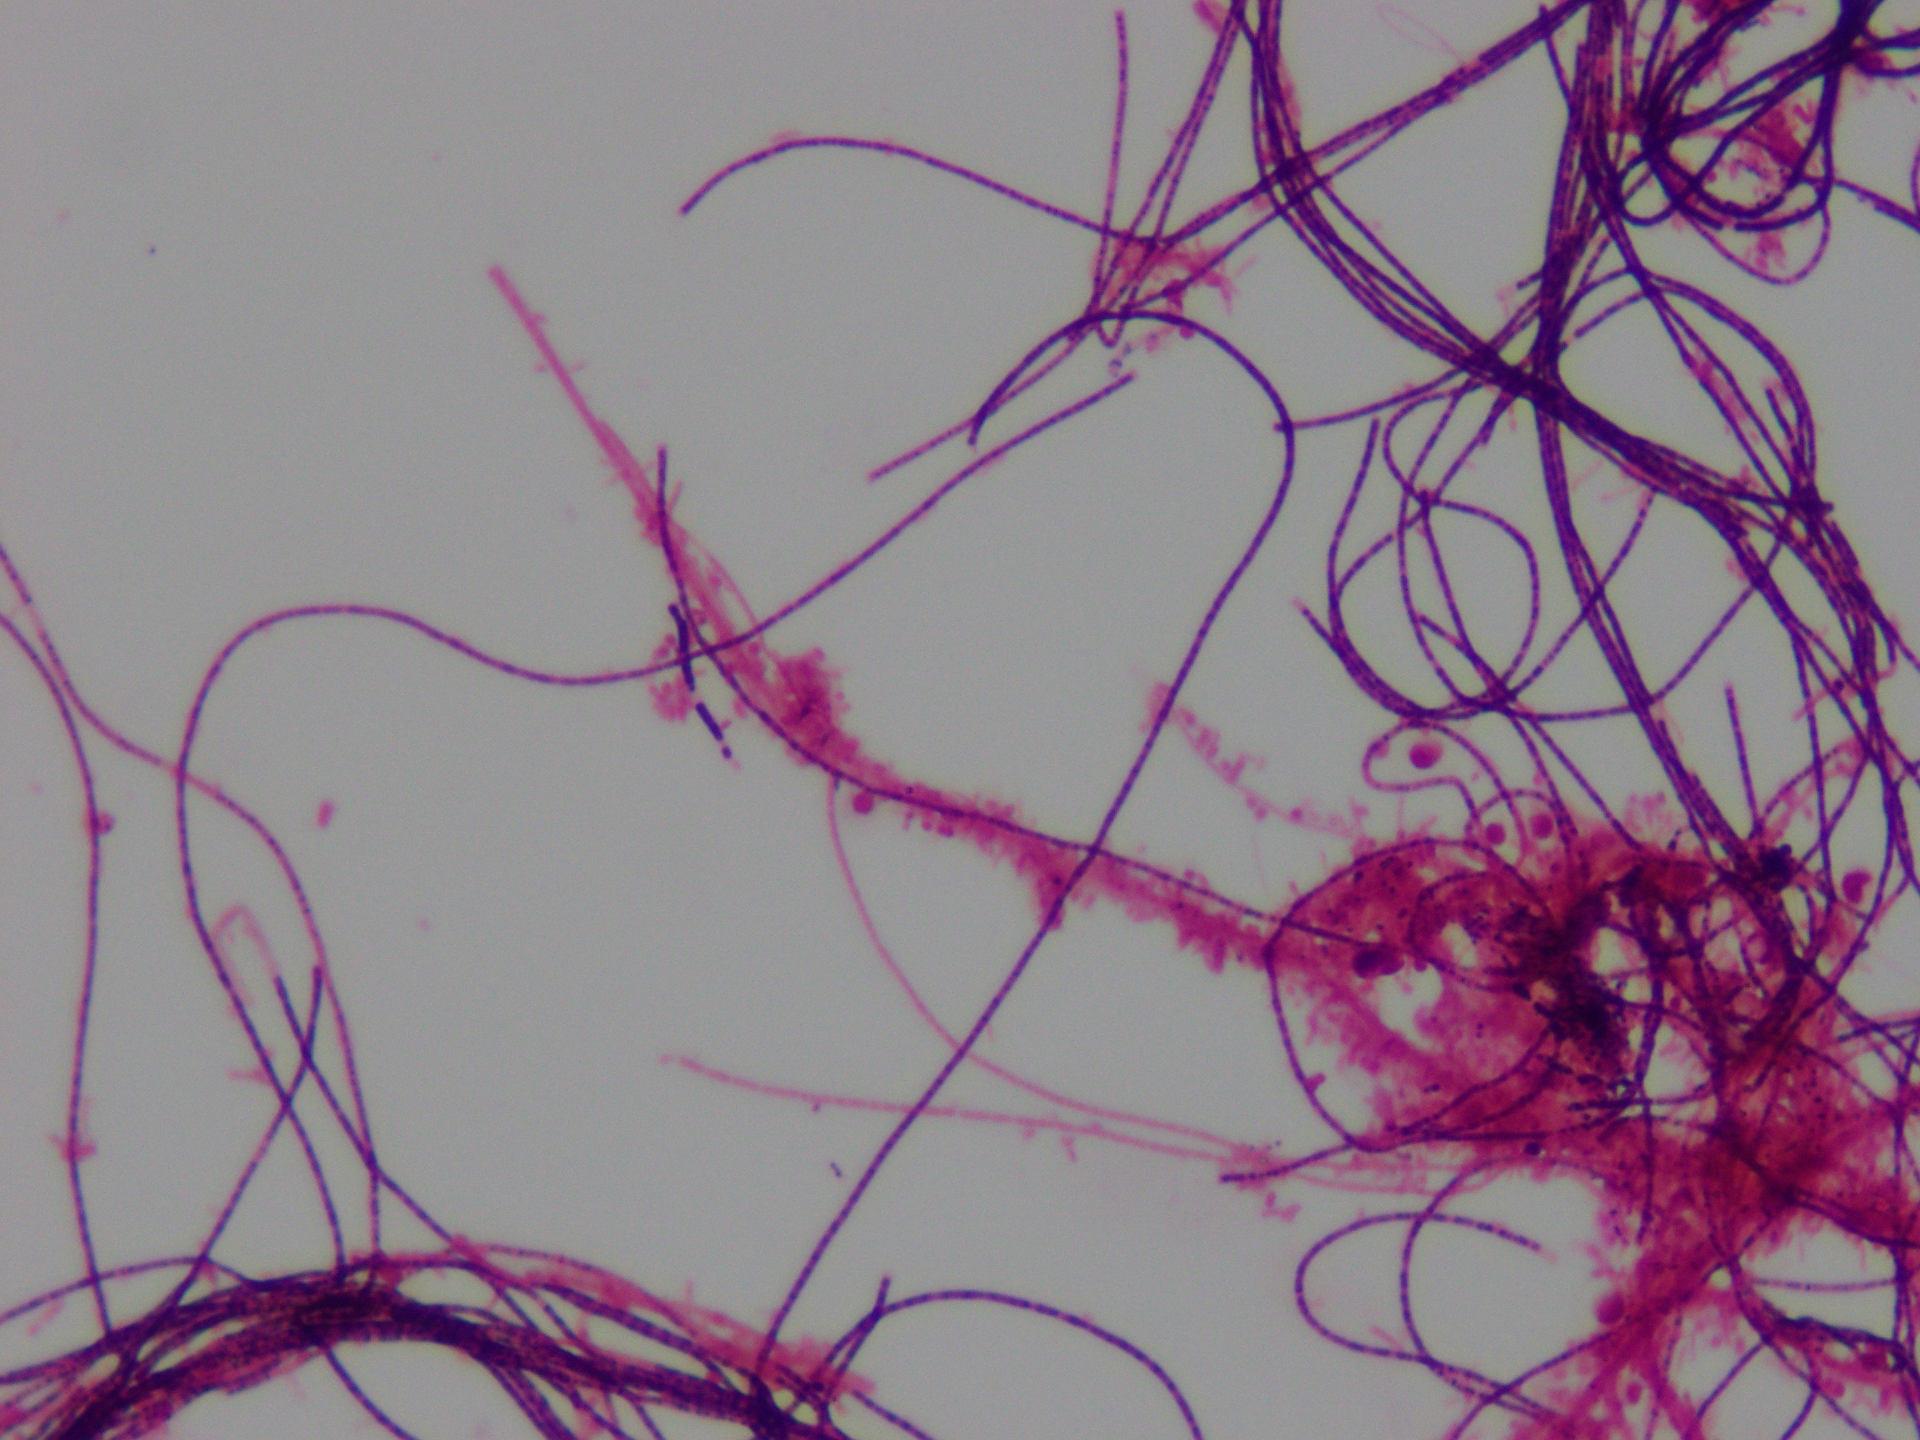 microscopic image of filamentous bacteria